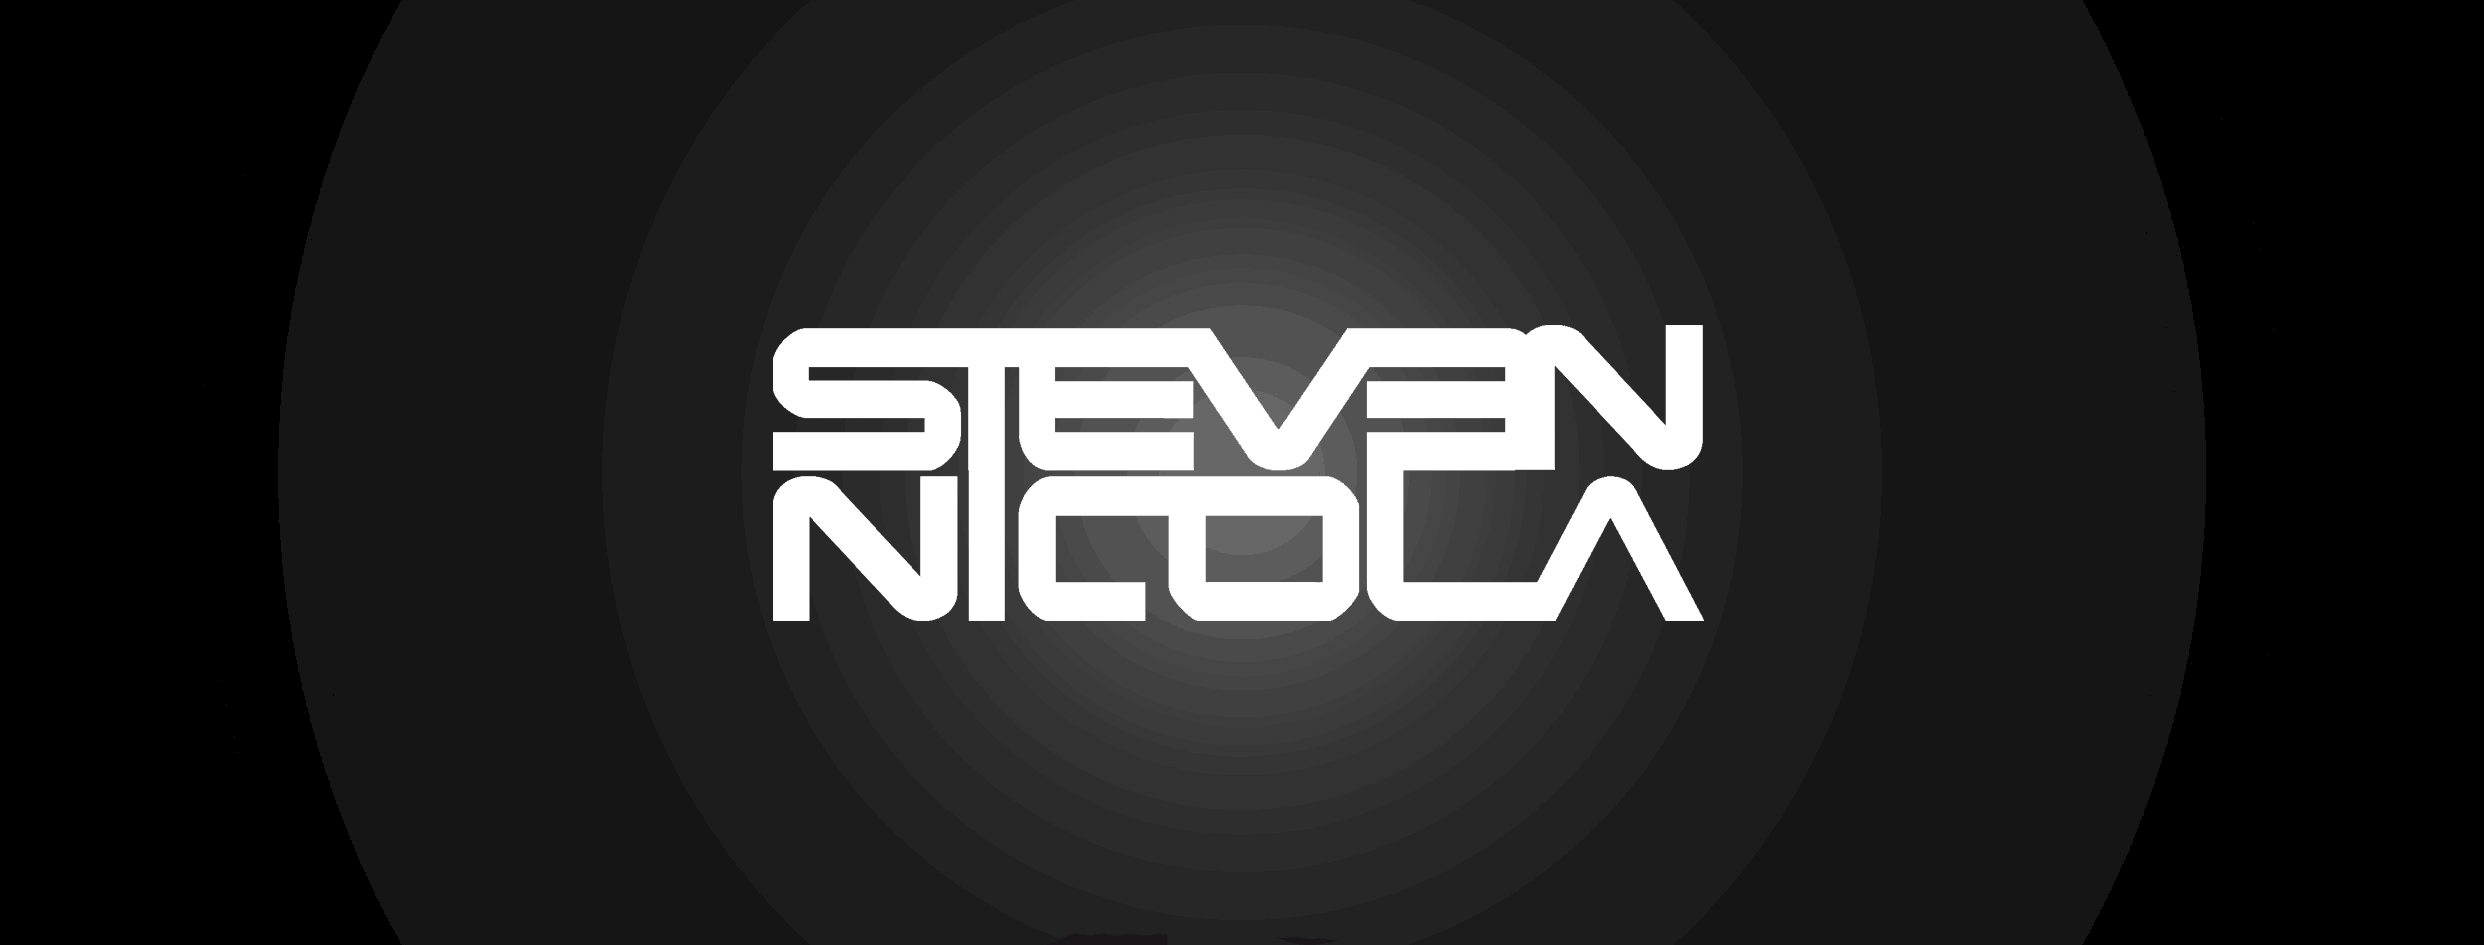 Steven Nicola (logo)